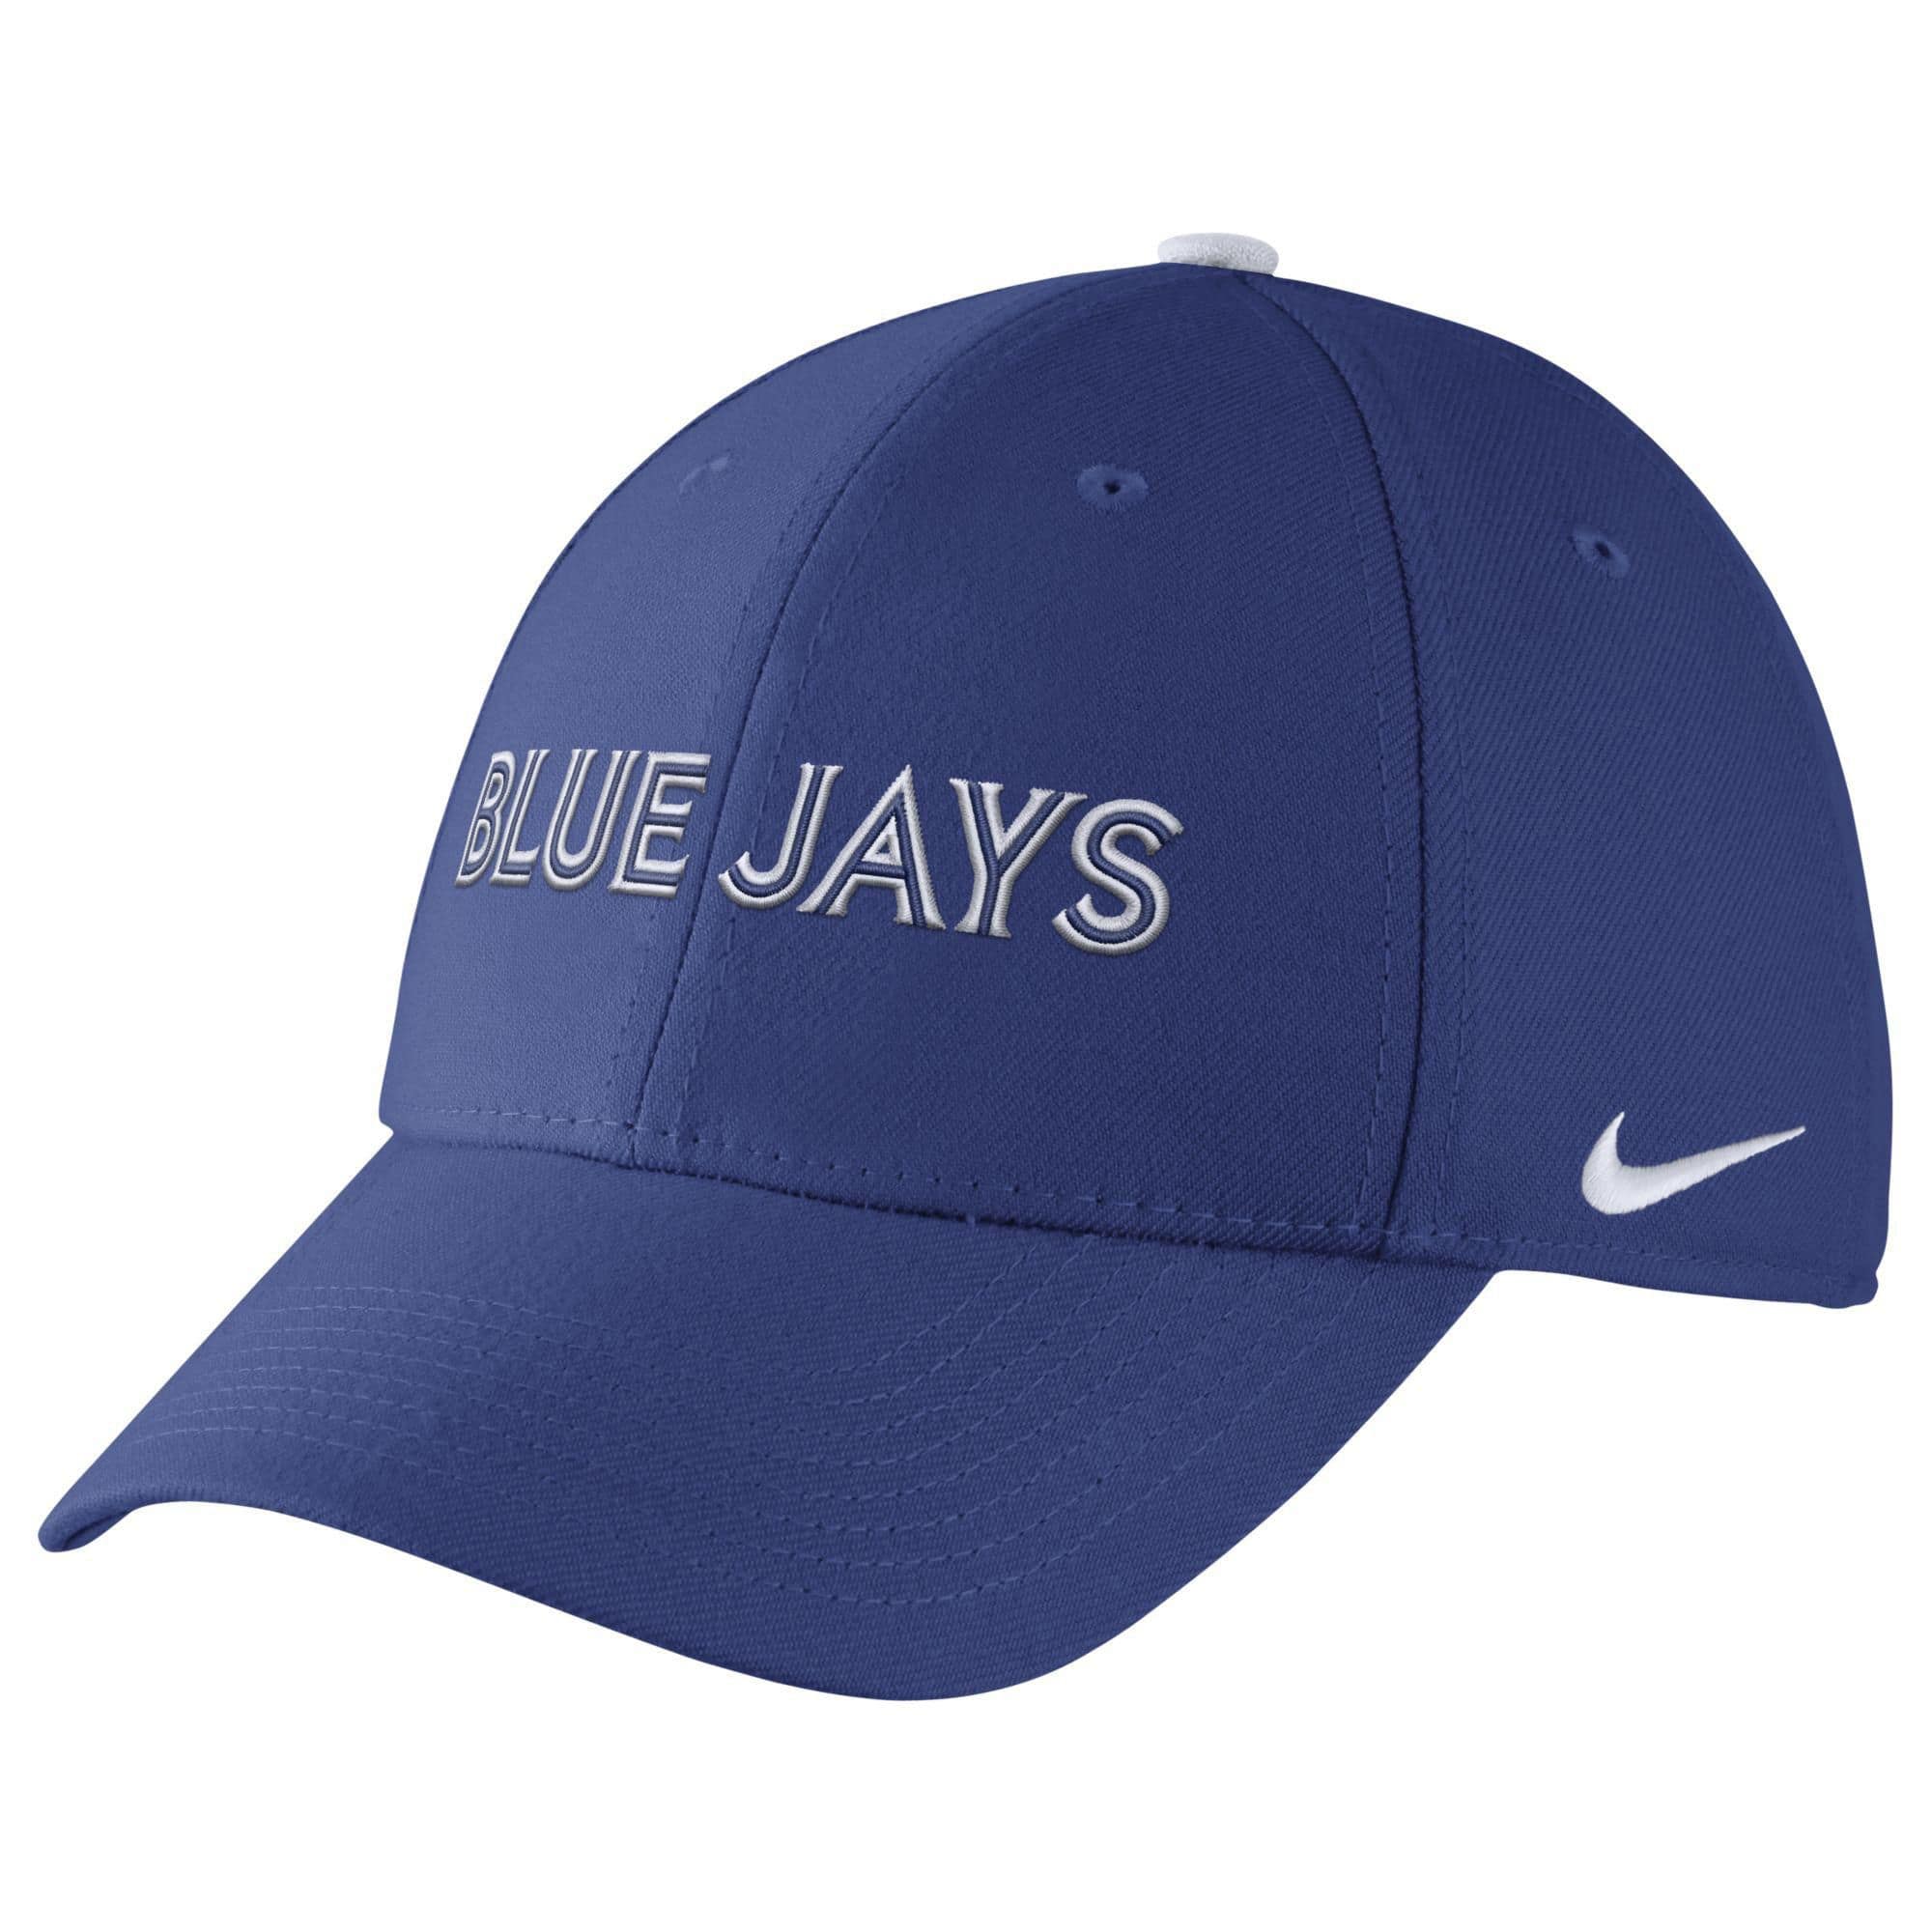 Toronto Blue Jays MLB Nike Team Issued Drifit Shirt